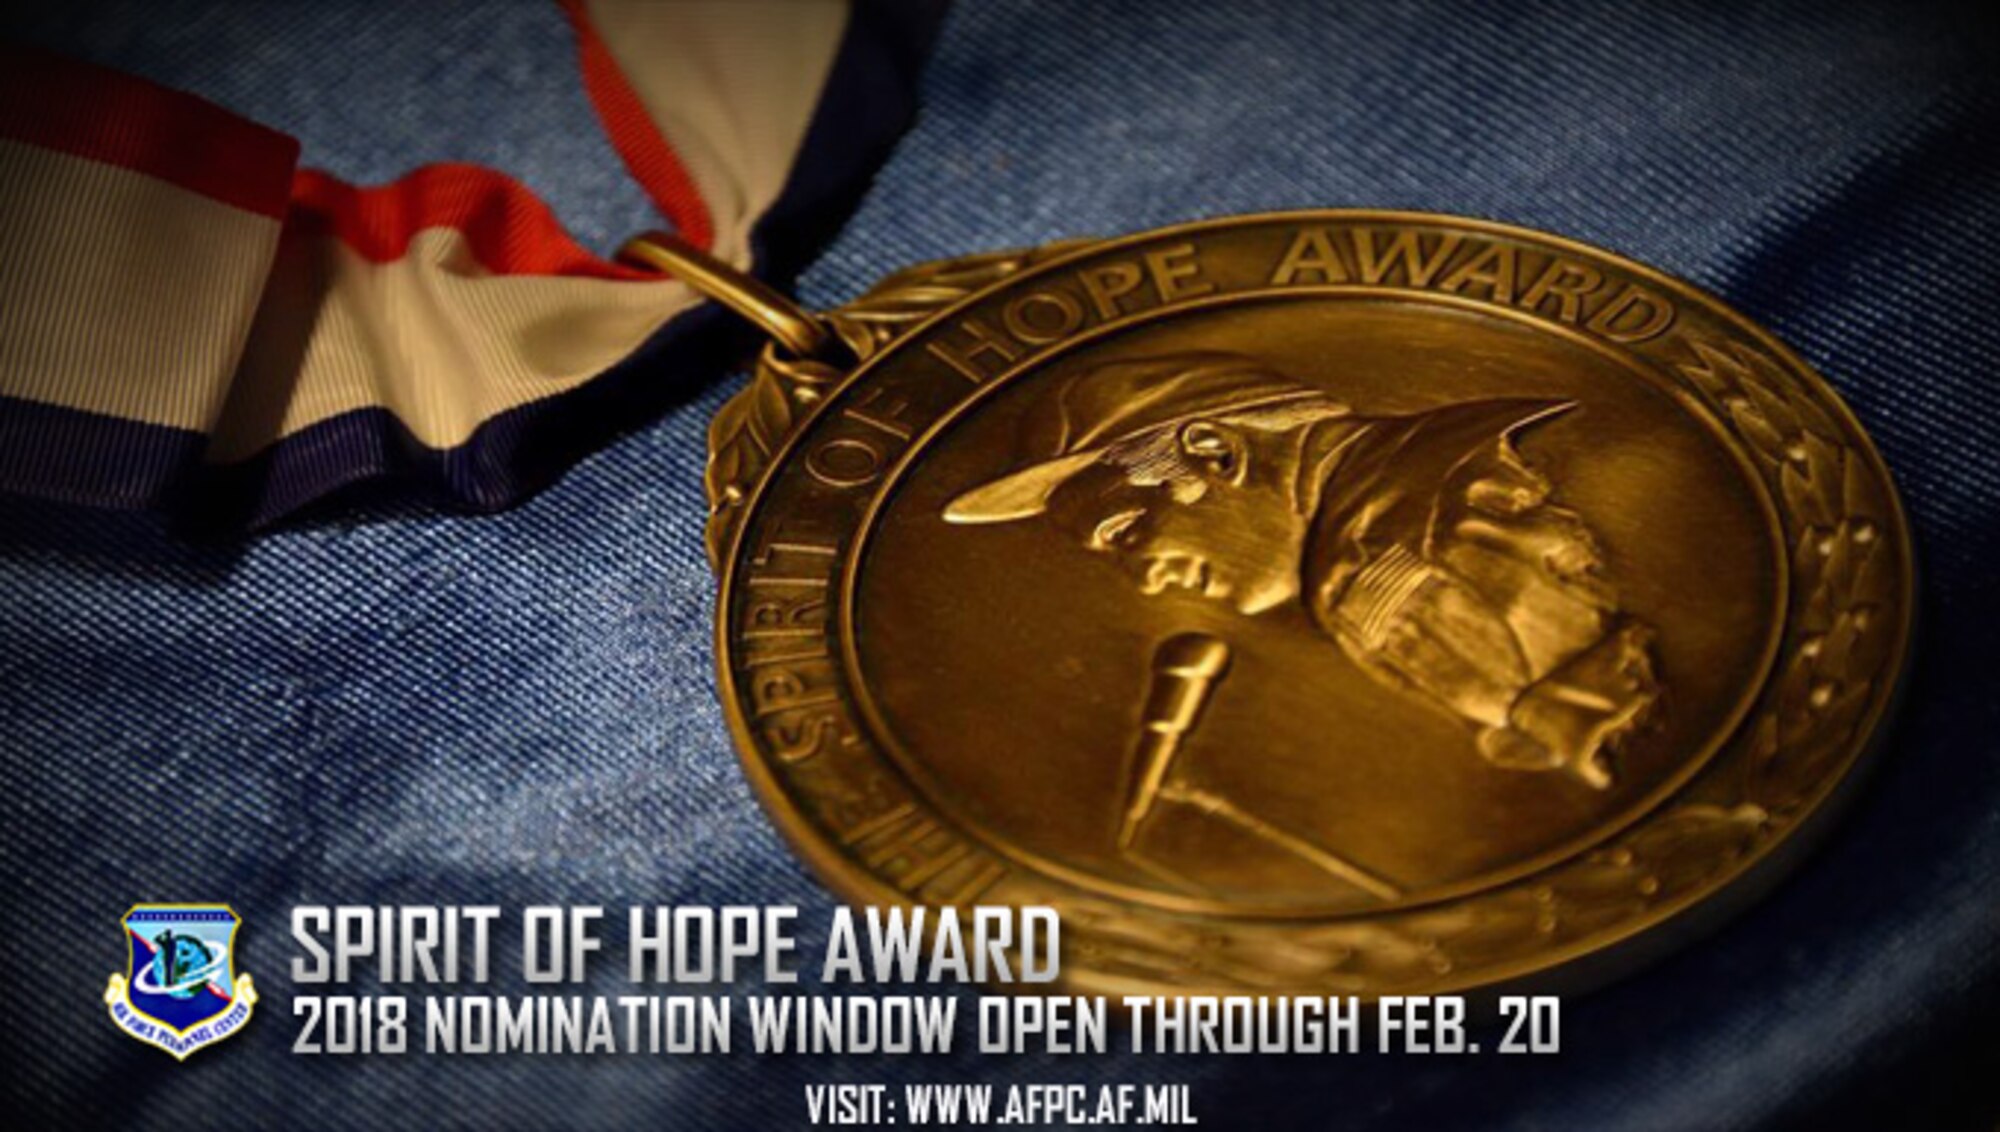 Spirit of Hope Award; 2018 nomination window open through Feb. 20